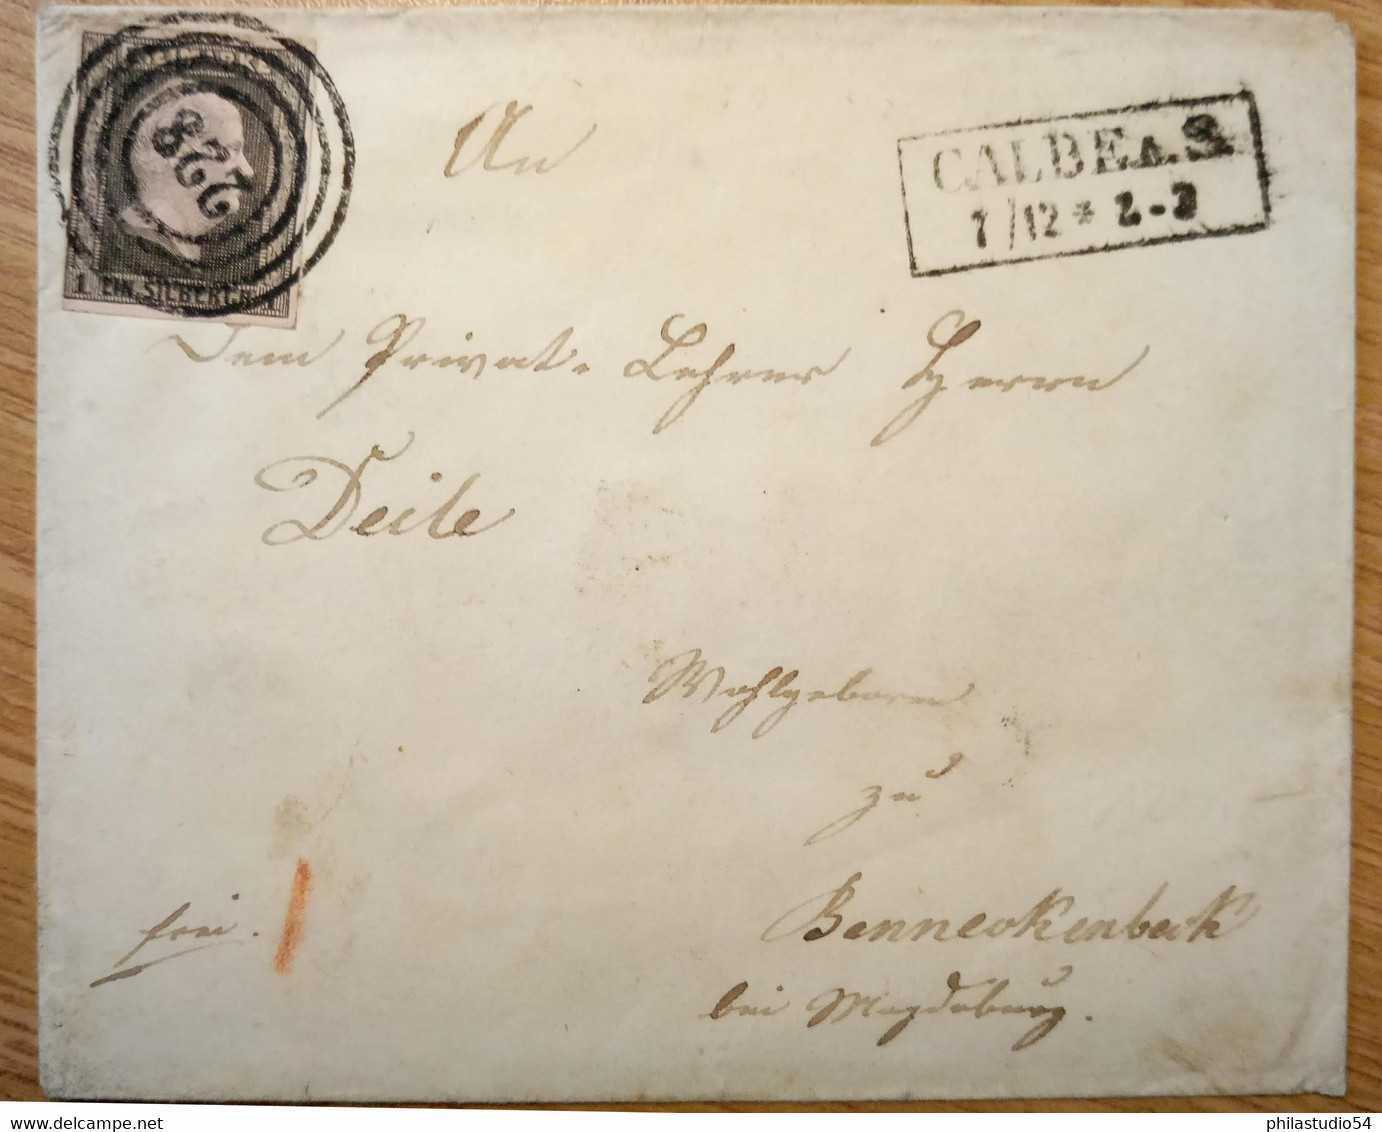 1851, Umschlag Mit 1 Sgr., Klarer Nummernstempel "228" Mit Ra2 "CALBE 1/12" - Briefe U. Dokumente